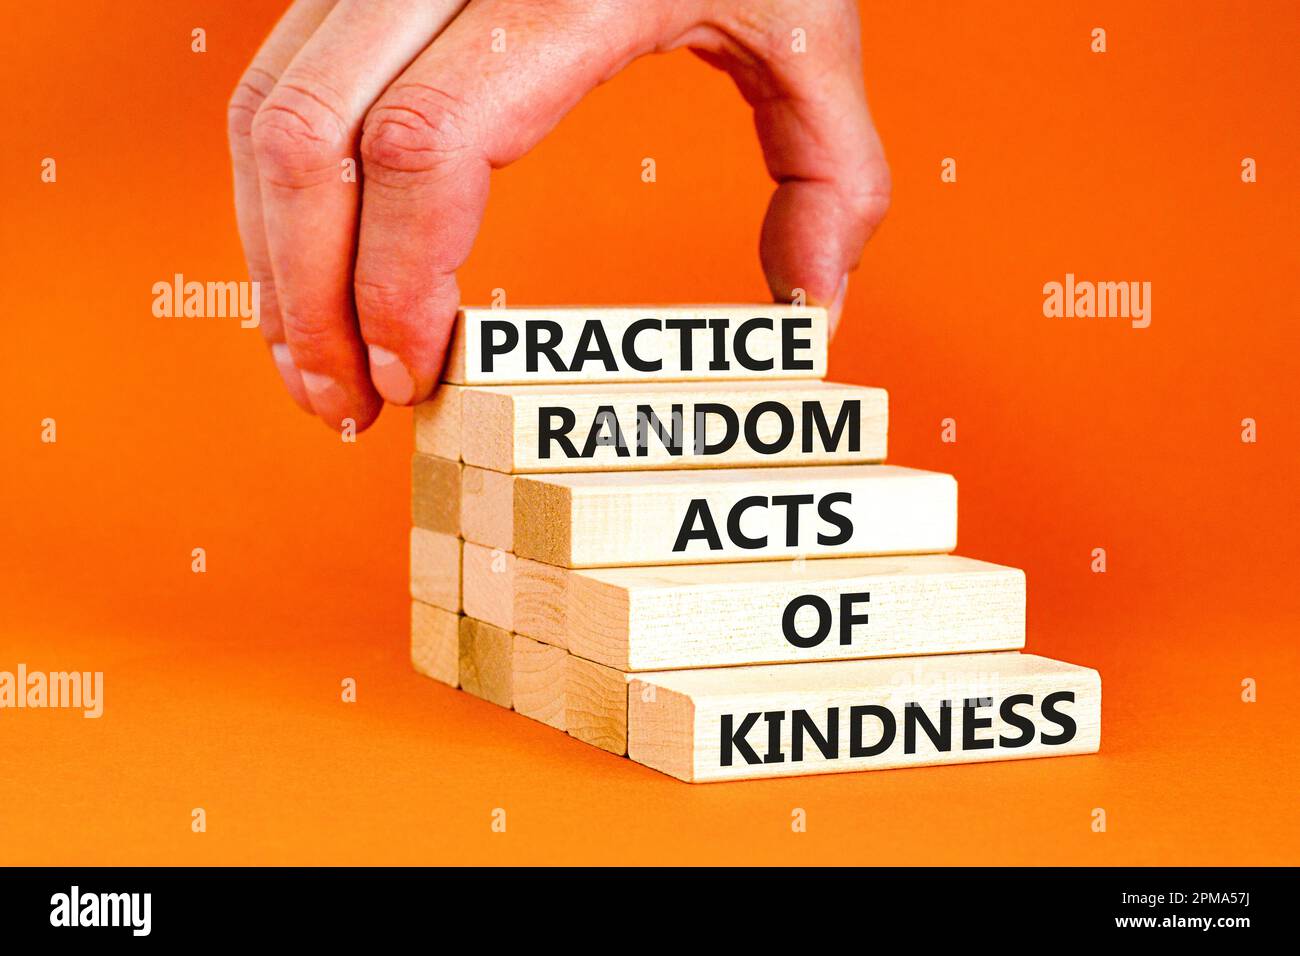 Practice random kind of kindness symbol. Concept words Practice random kind of kindness on wooden block. Beautiful orange background. Businessman hand Stock Photo